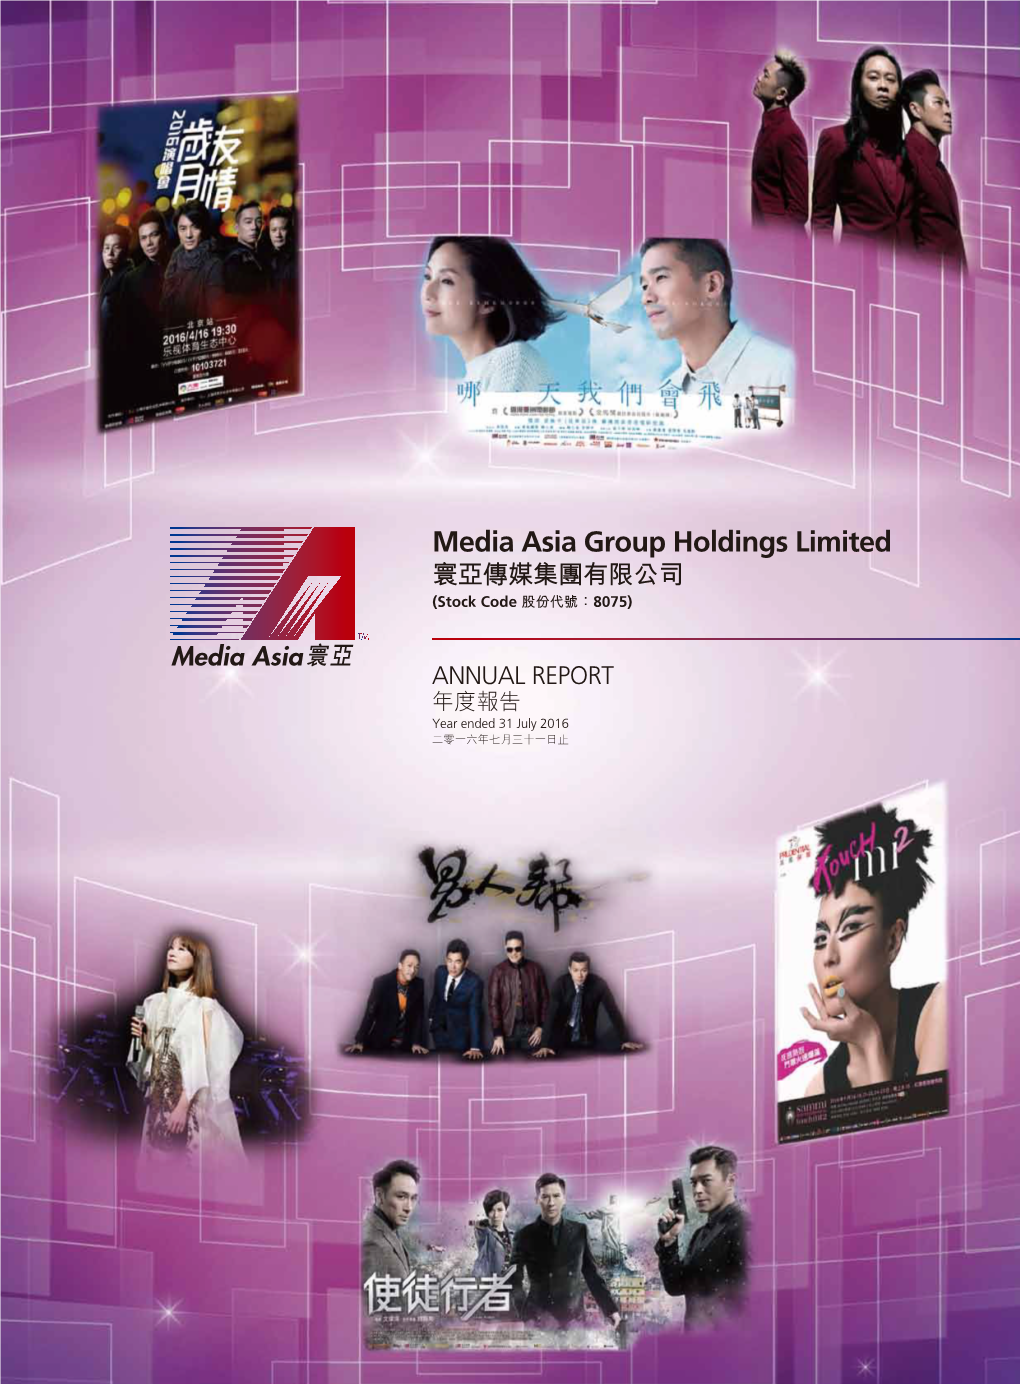 Media Asia Group Holdings Limited 寰亞傳媒集團有限公司 (Stock Code 股份代號：8075)